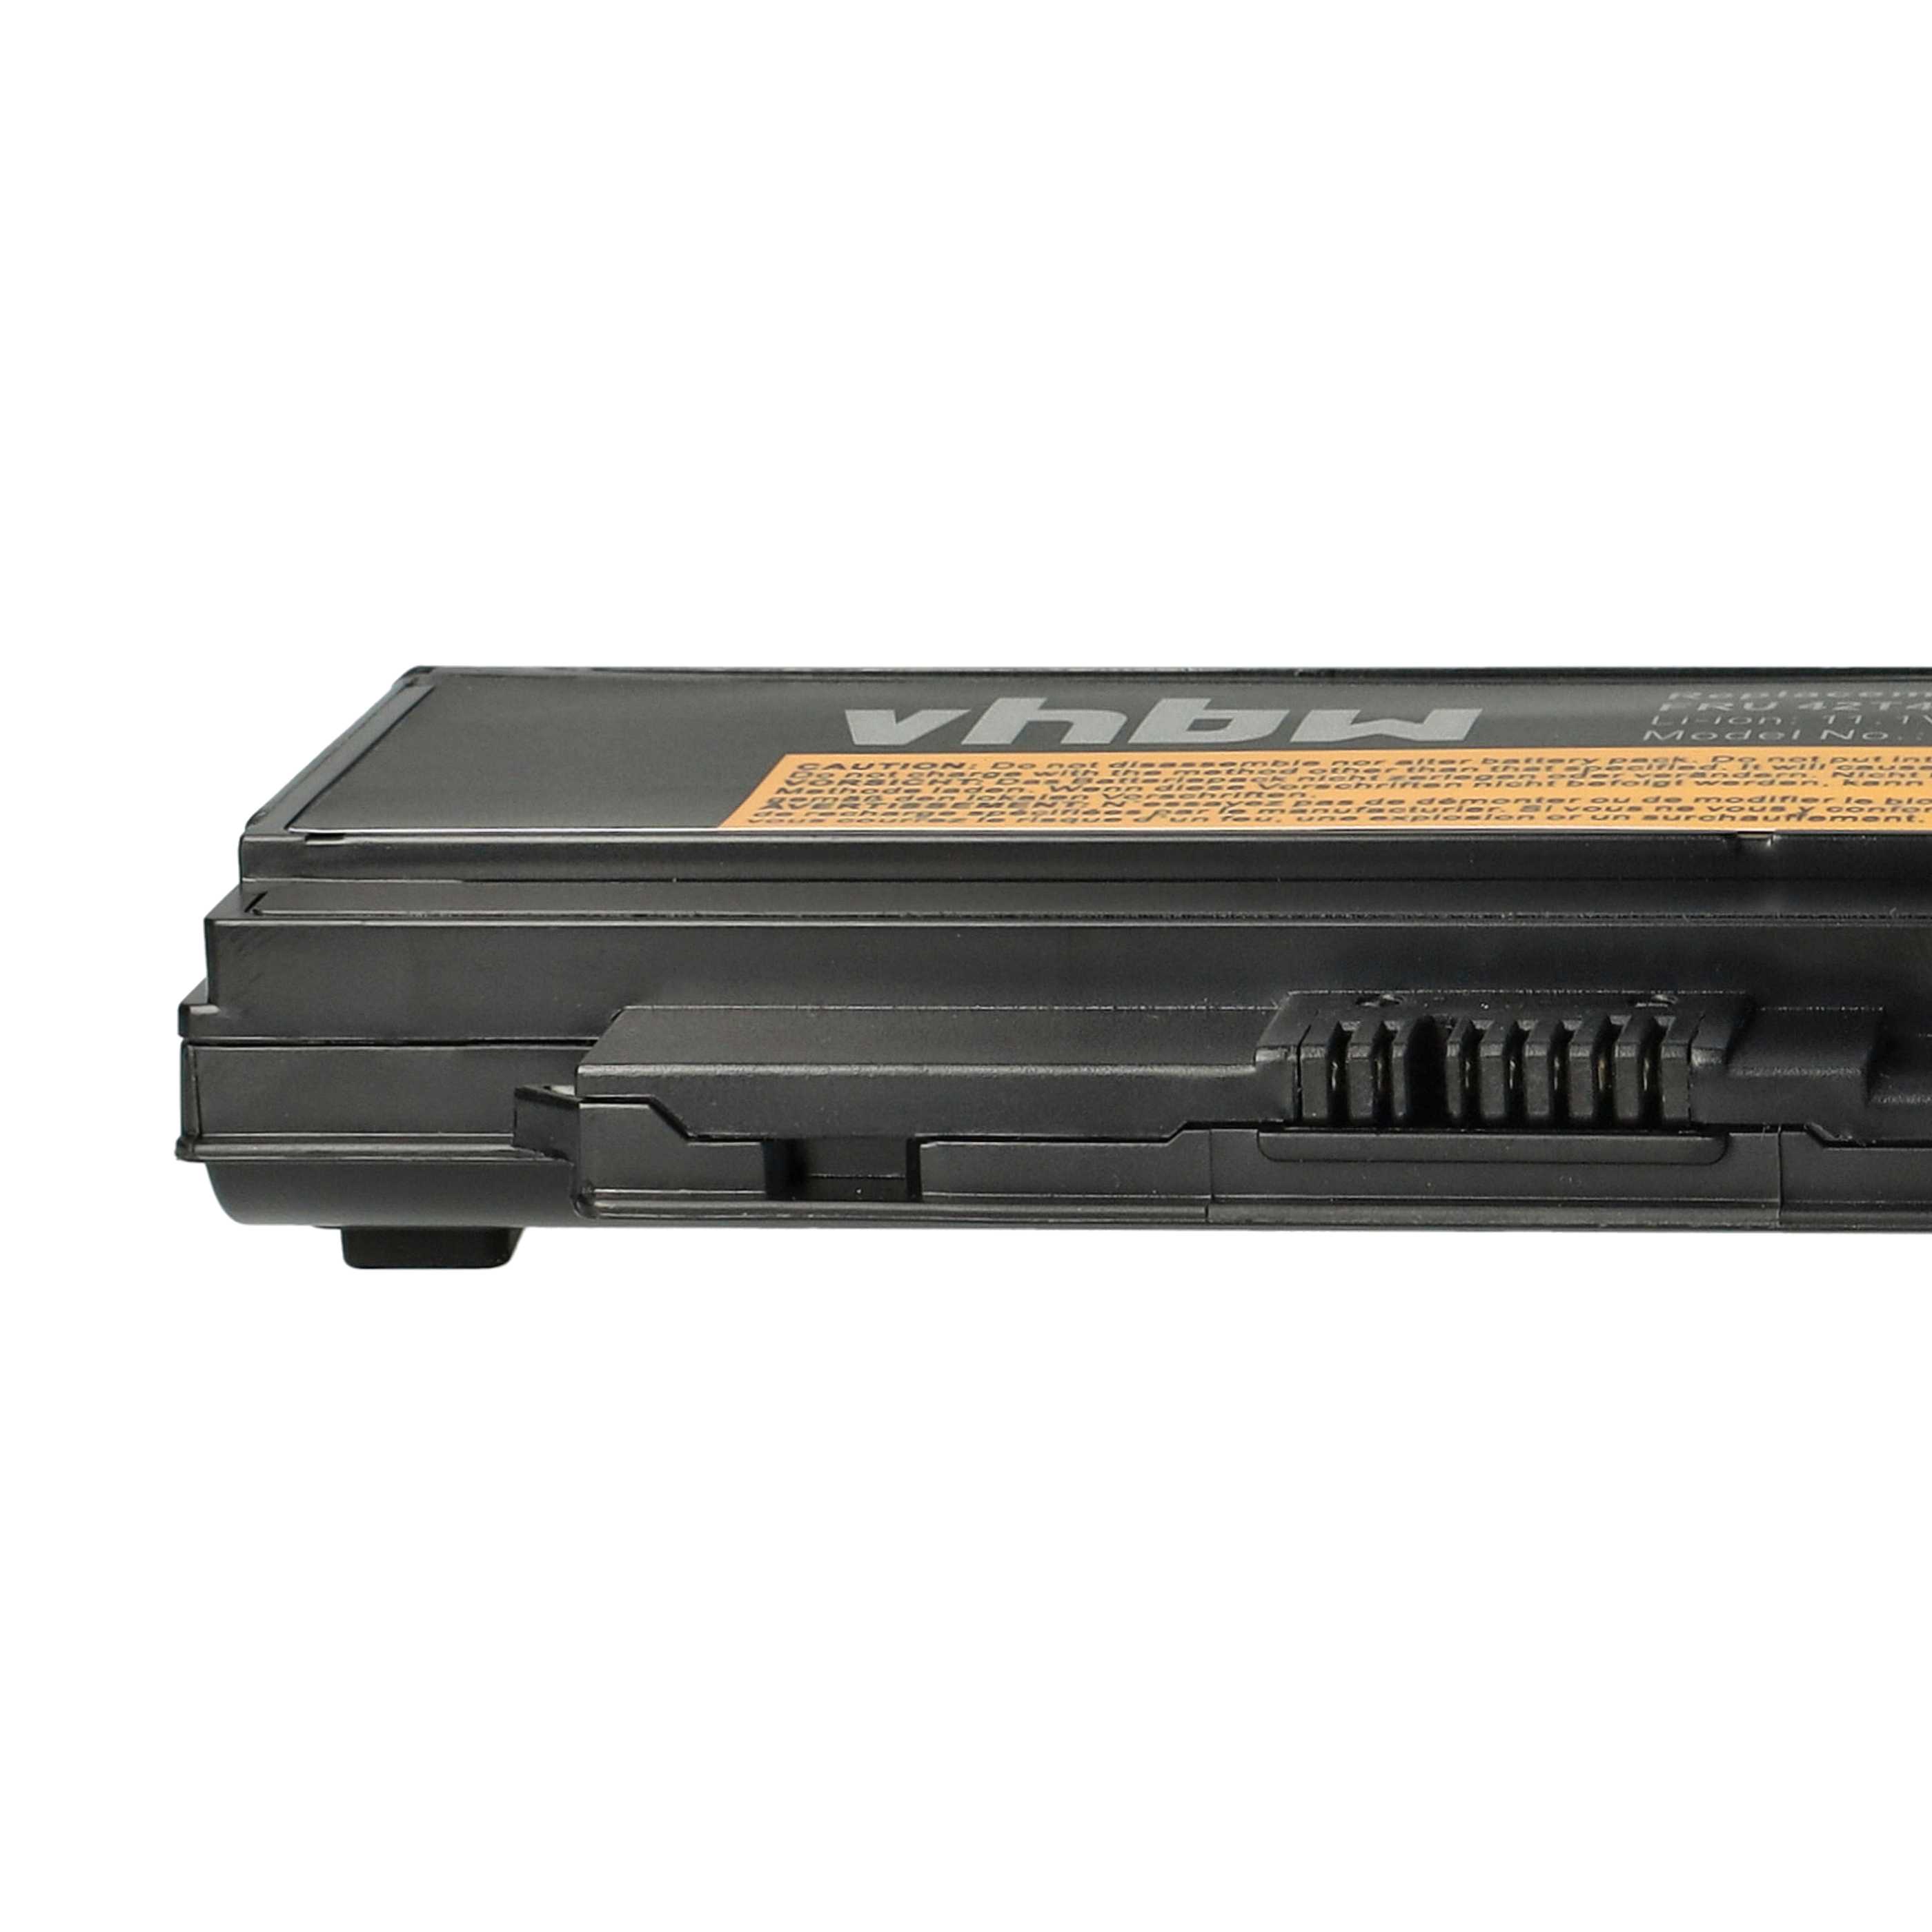 Akumulator do laptopa zamiennik Lenovo 0A36283, 0A36307, 0A36281, 0A36282 - 4400 mAh 11,1 V Li-Ion, czarny